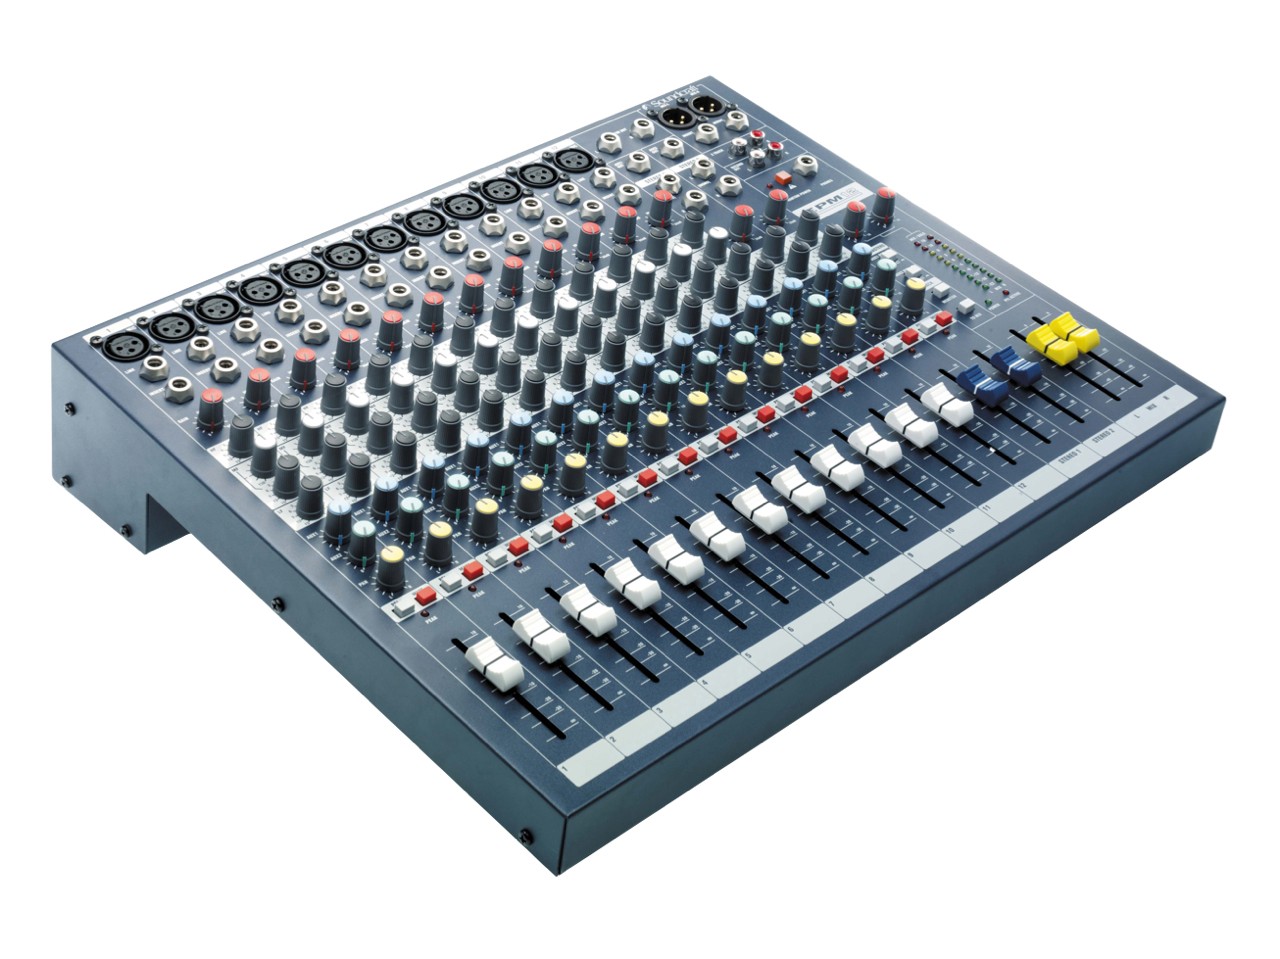 Soundcraft Epm12 - Analog mixing desk - Variation 2